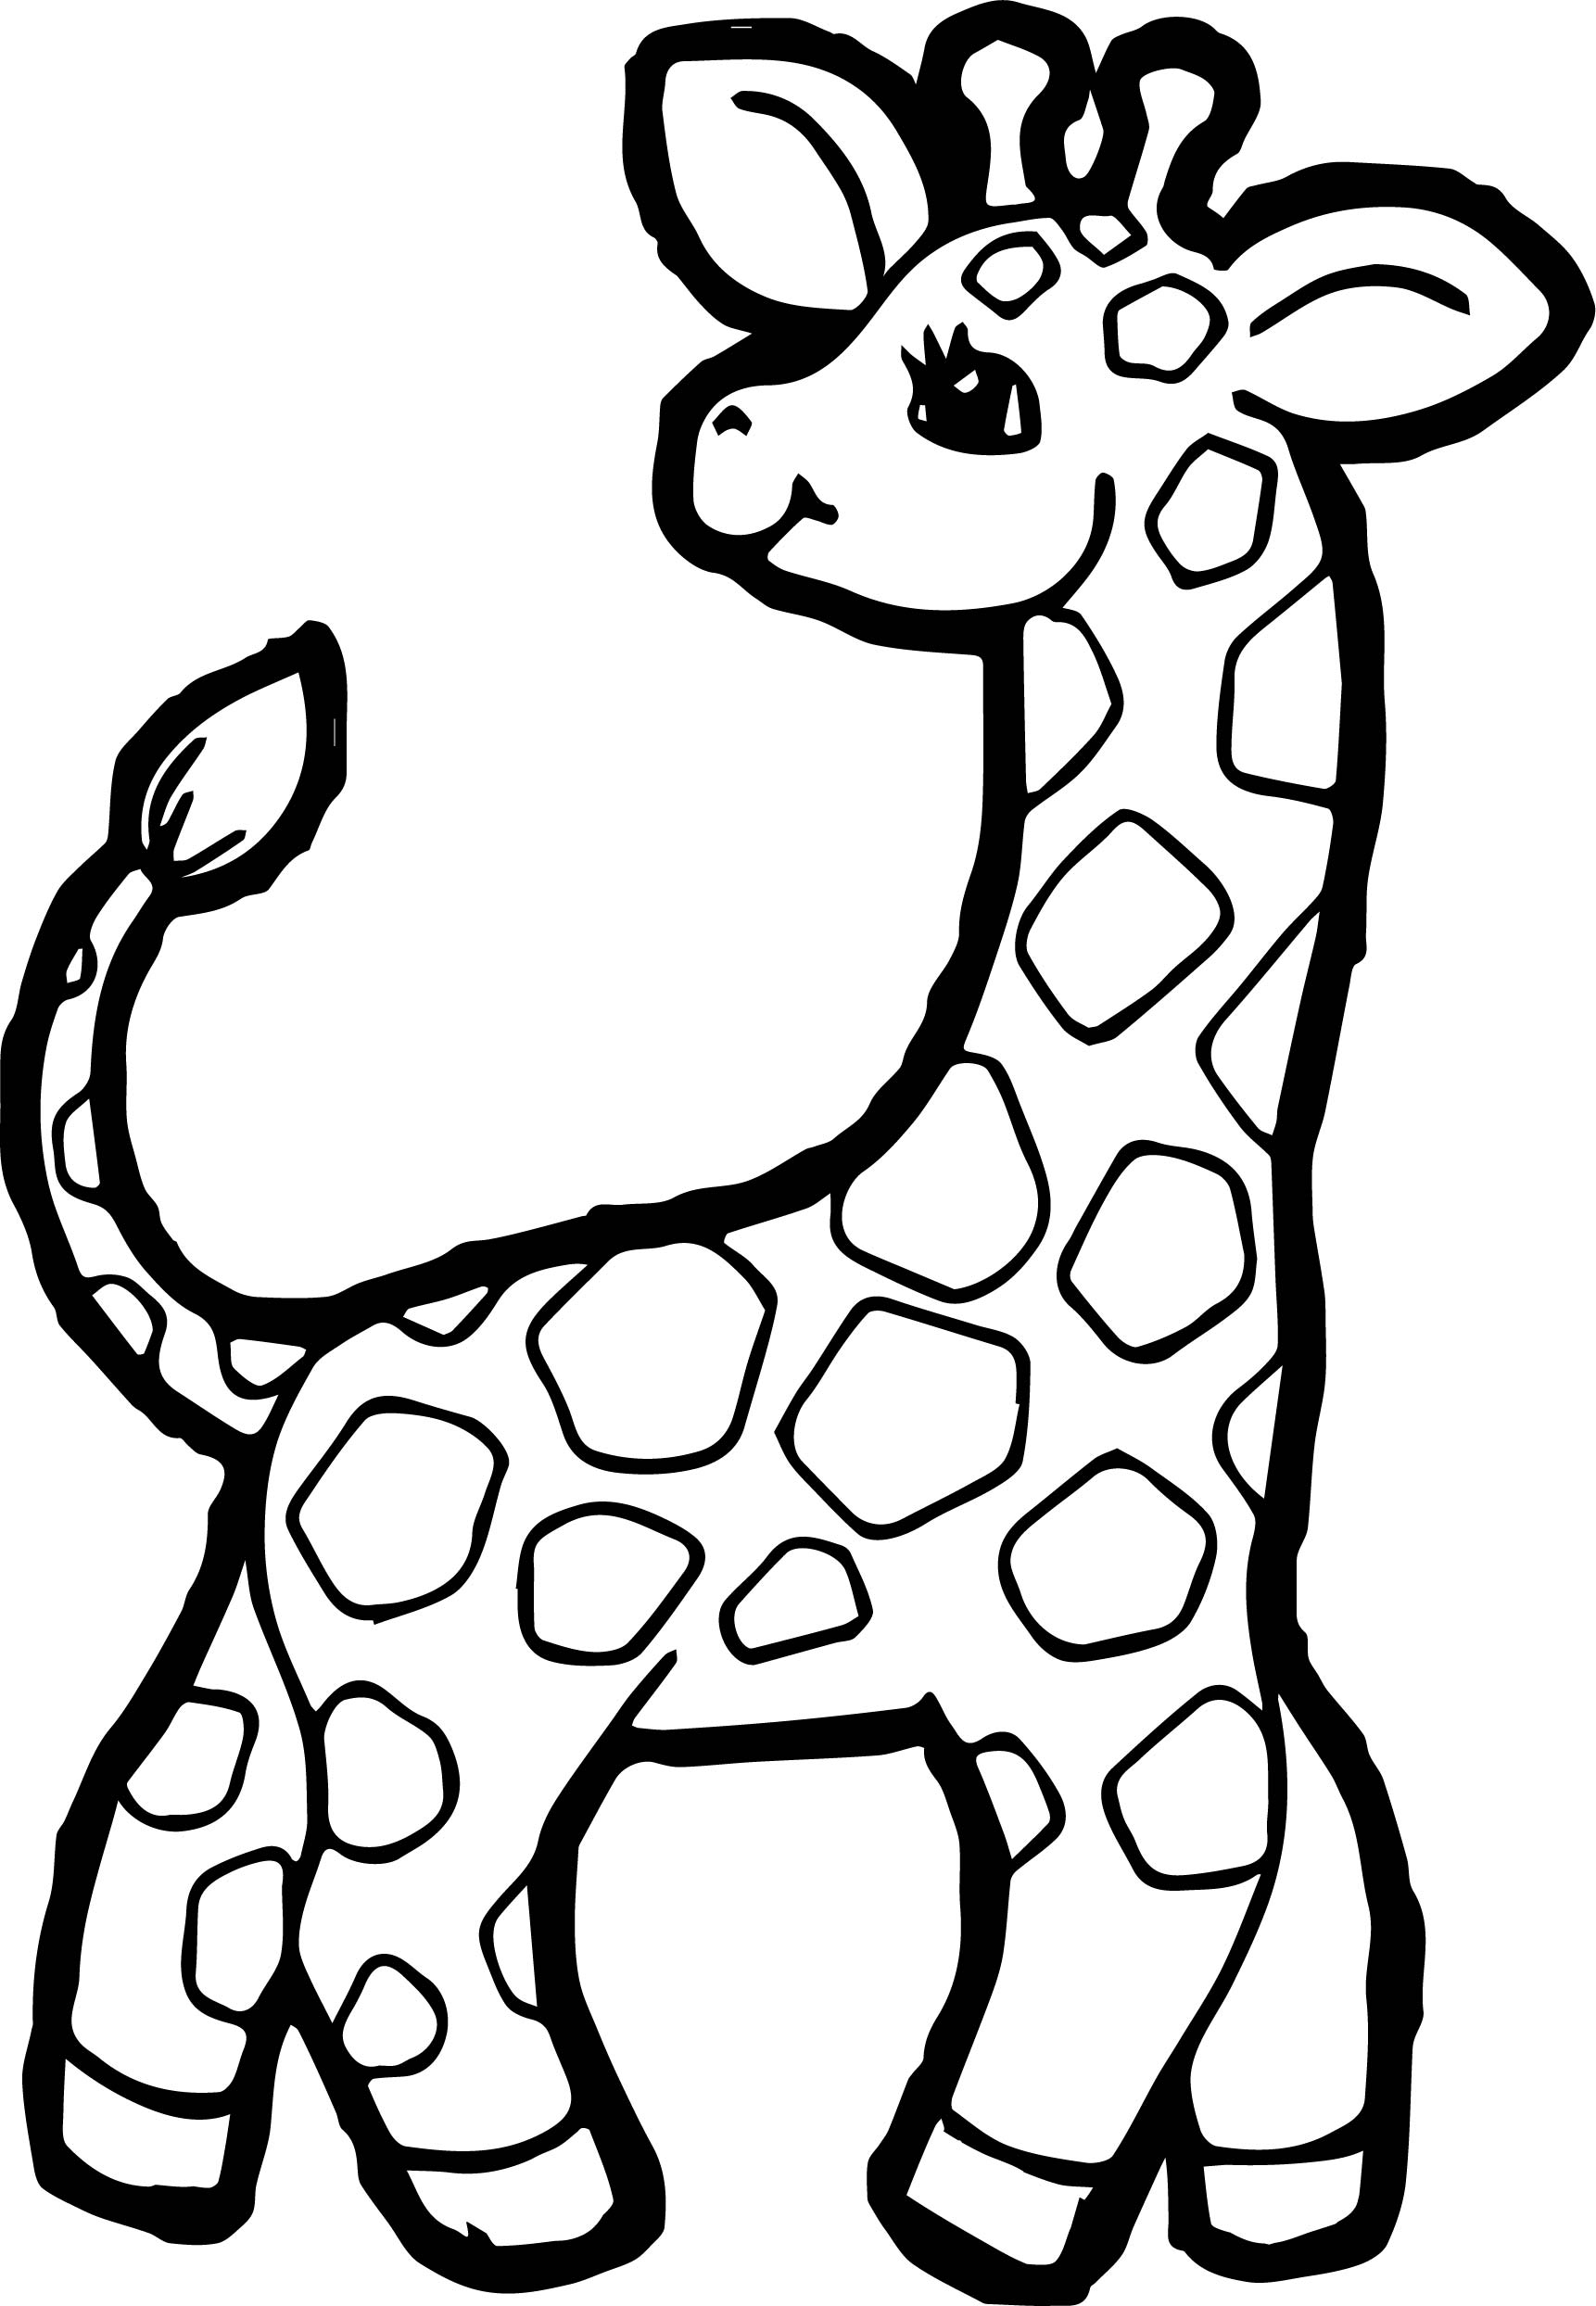 Giraffe clipart coloring, Giraffe coloring Transparent ...